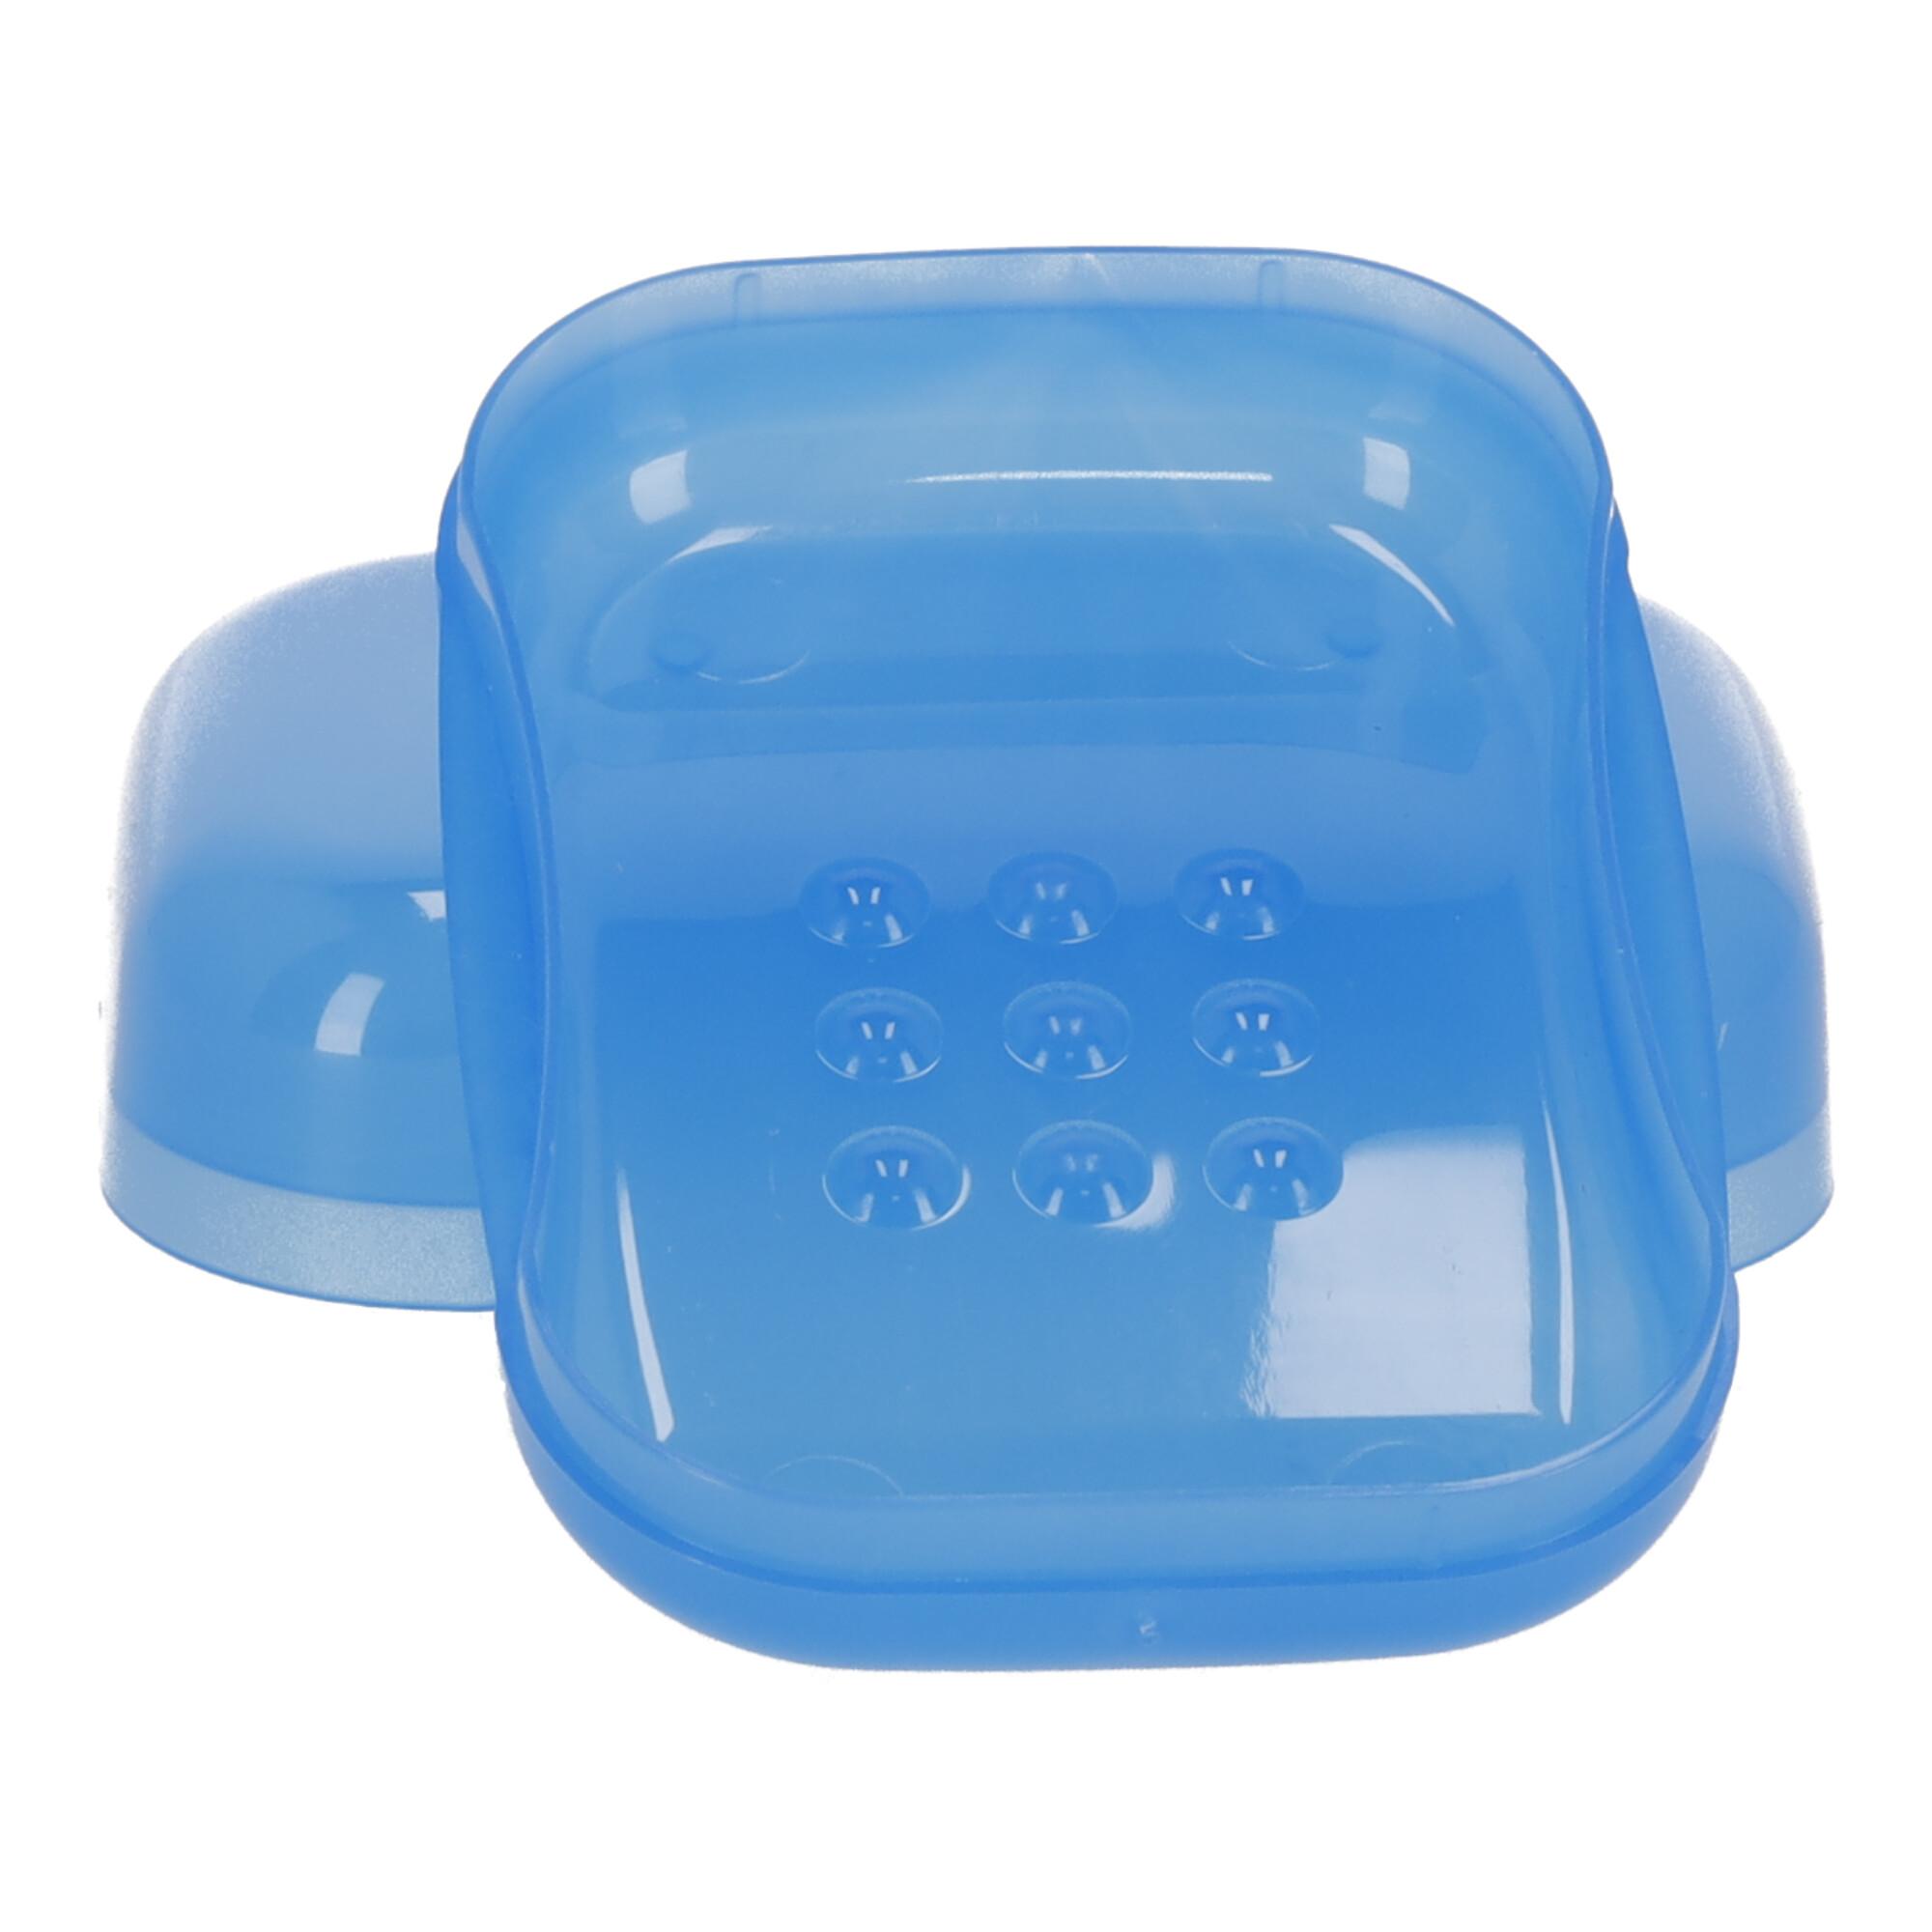 Tourist soap dish, closed plastic soap dish, type III - dark blue